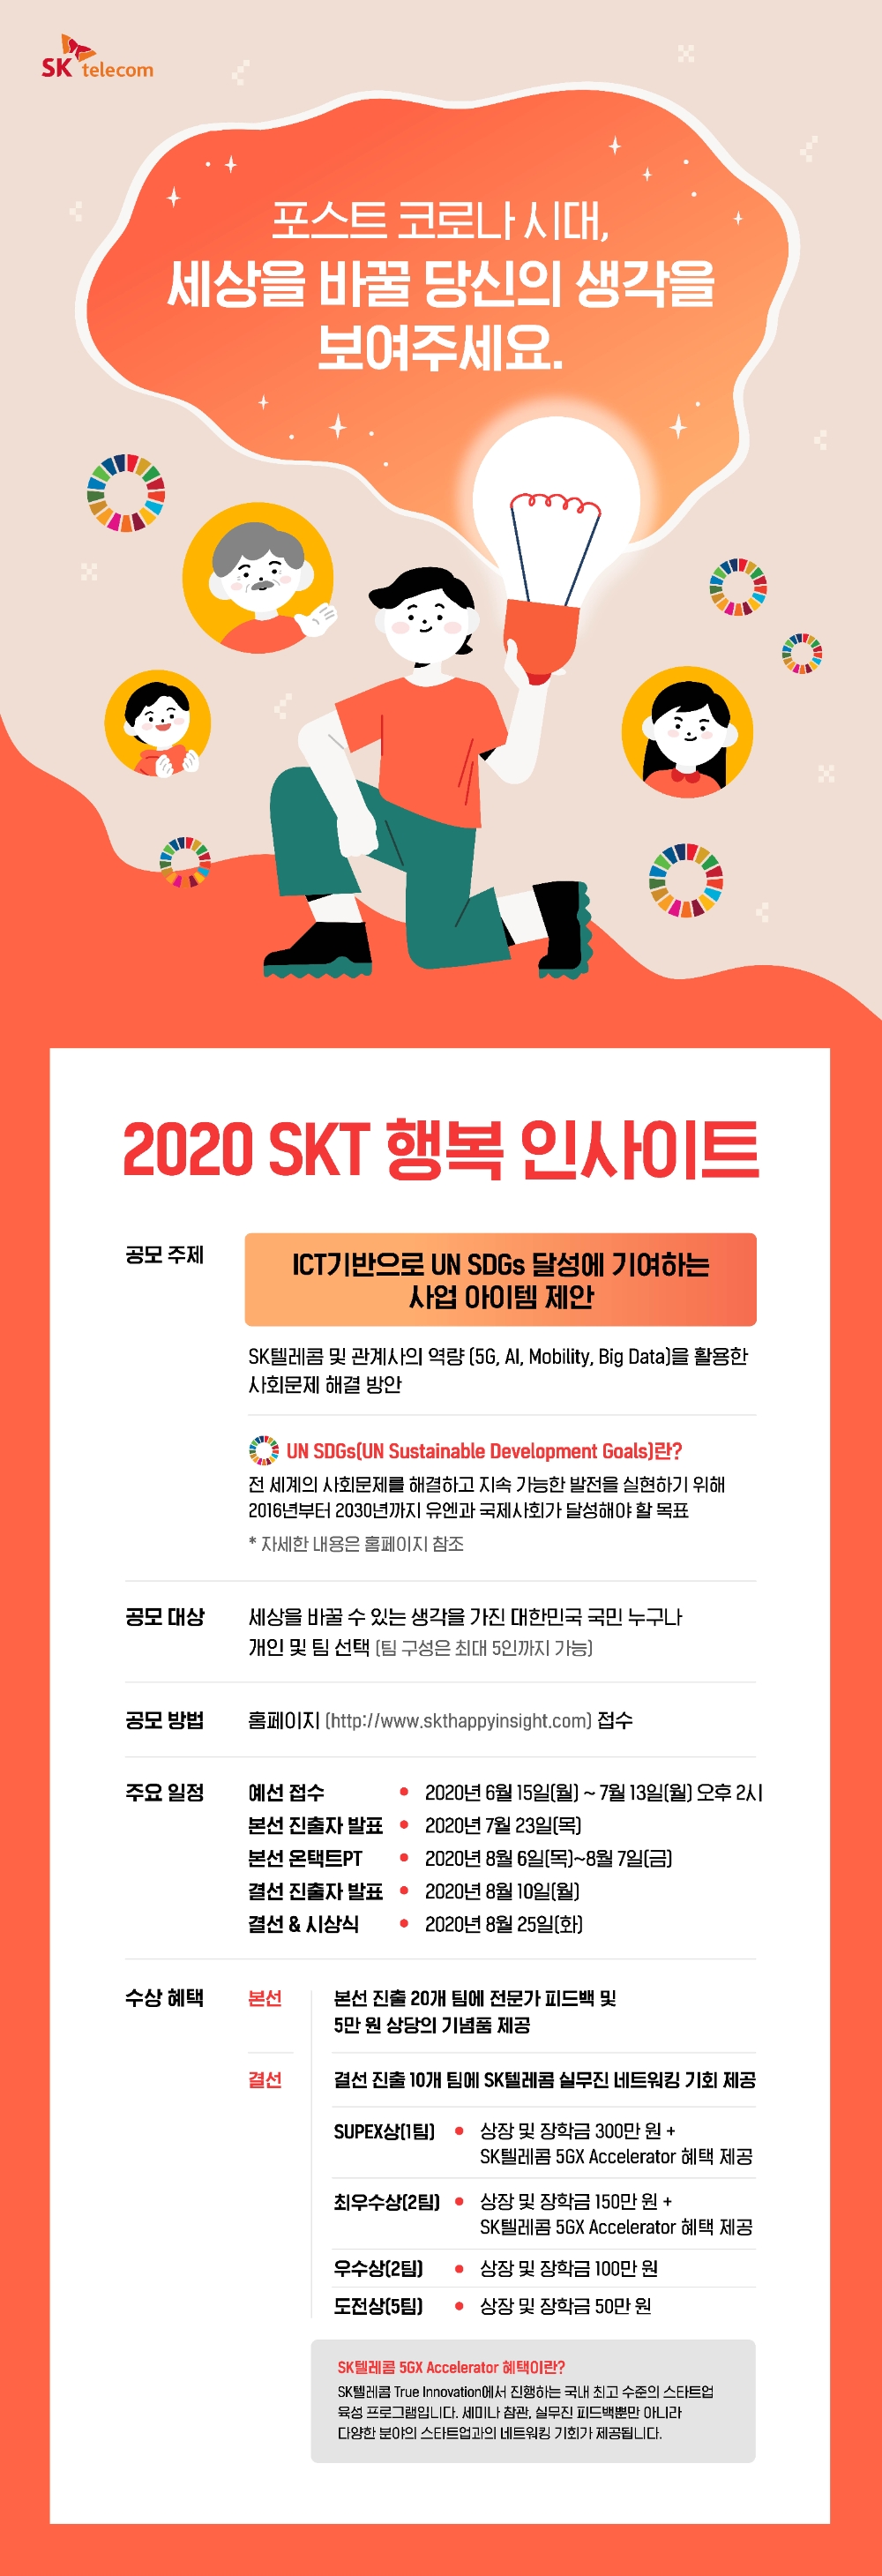 SK텔레콤이 포스트 코로나 시대 ICT 기반으로 한 사회가치 창출 아이템 발굴을 위해 '2020 SKT 행복 인사이트' 개최 